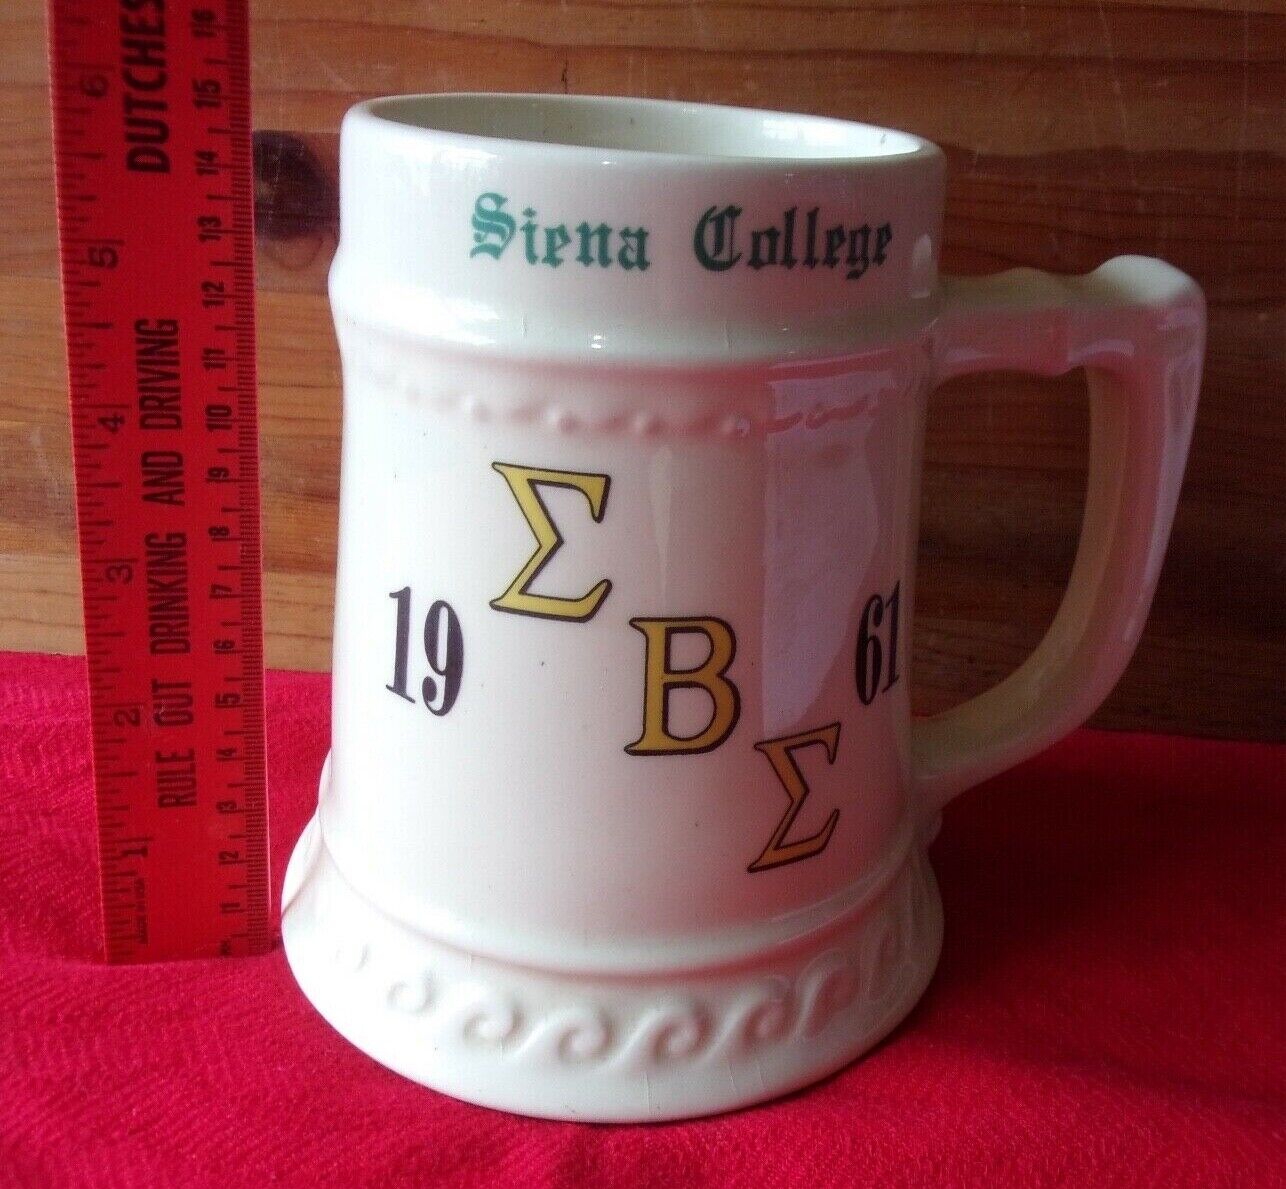 Vintage Siena College beer stein Mug 1961 Sigma Beta Sigma Fraternity Porcelain